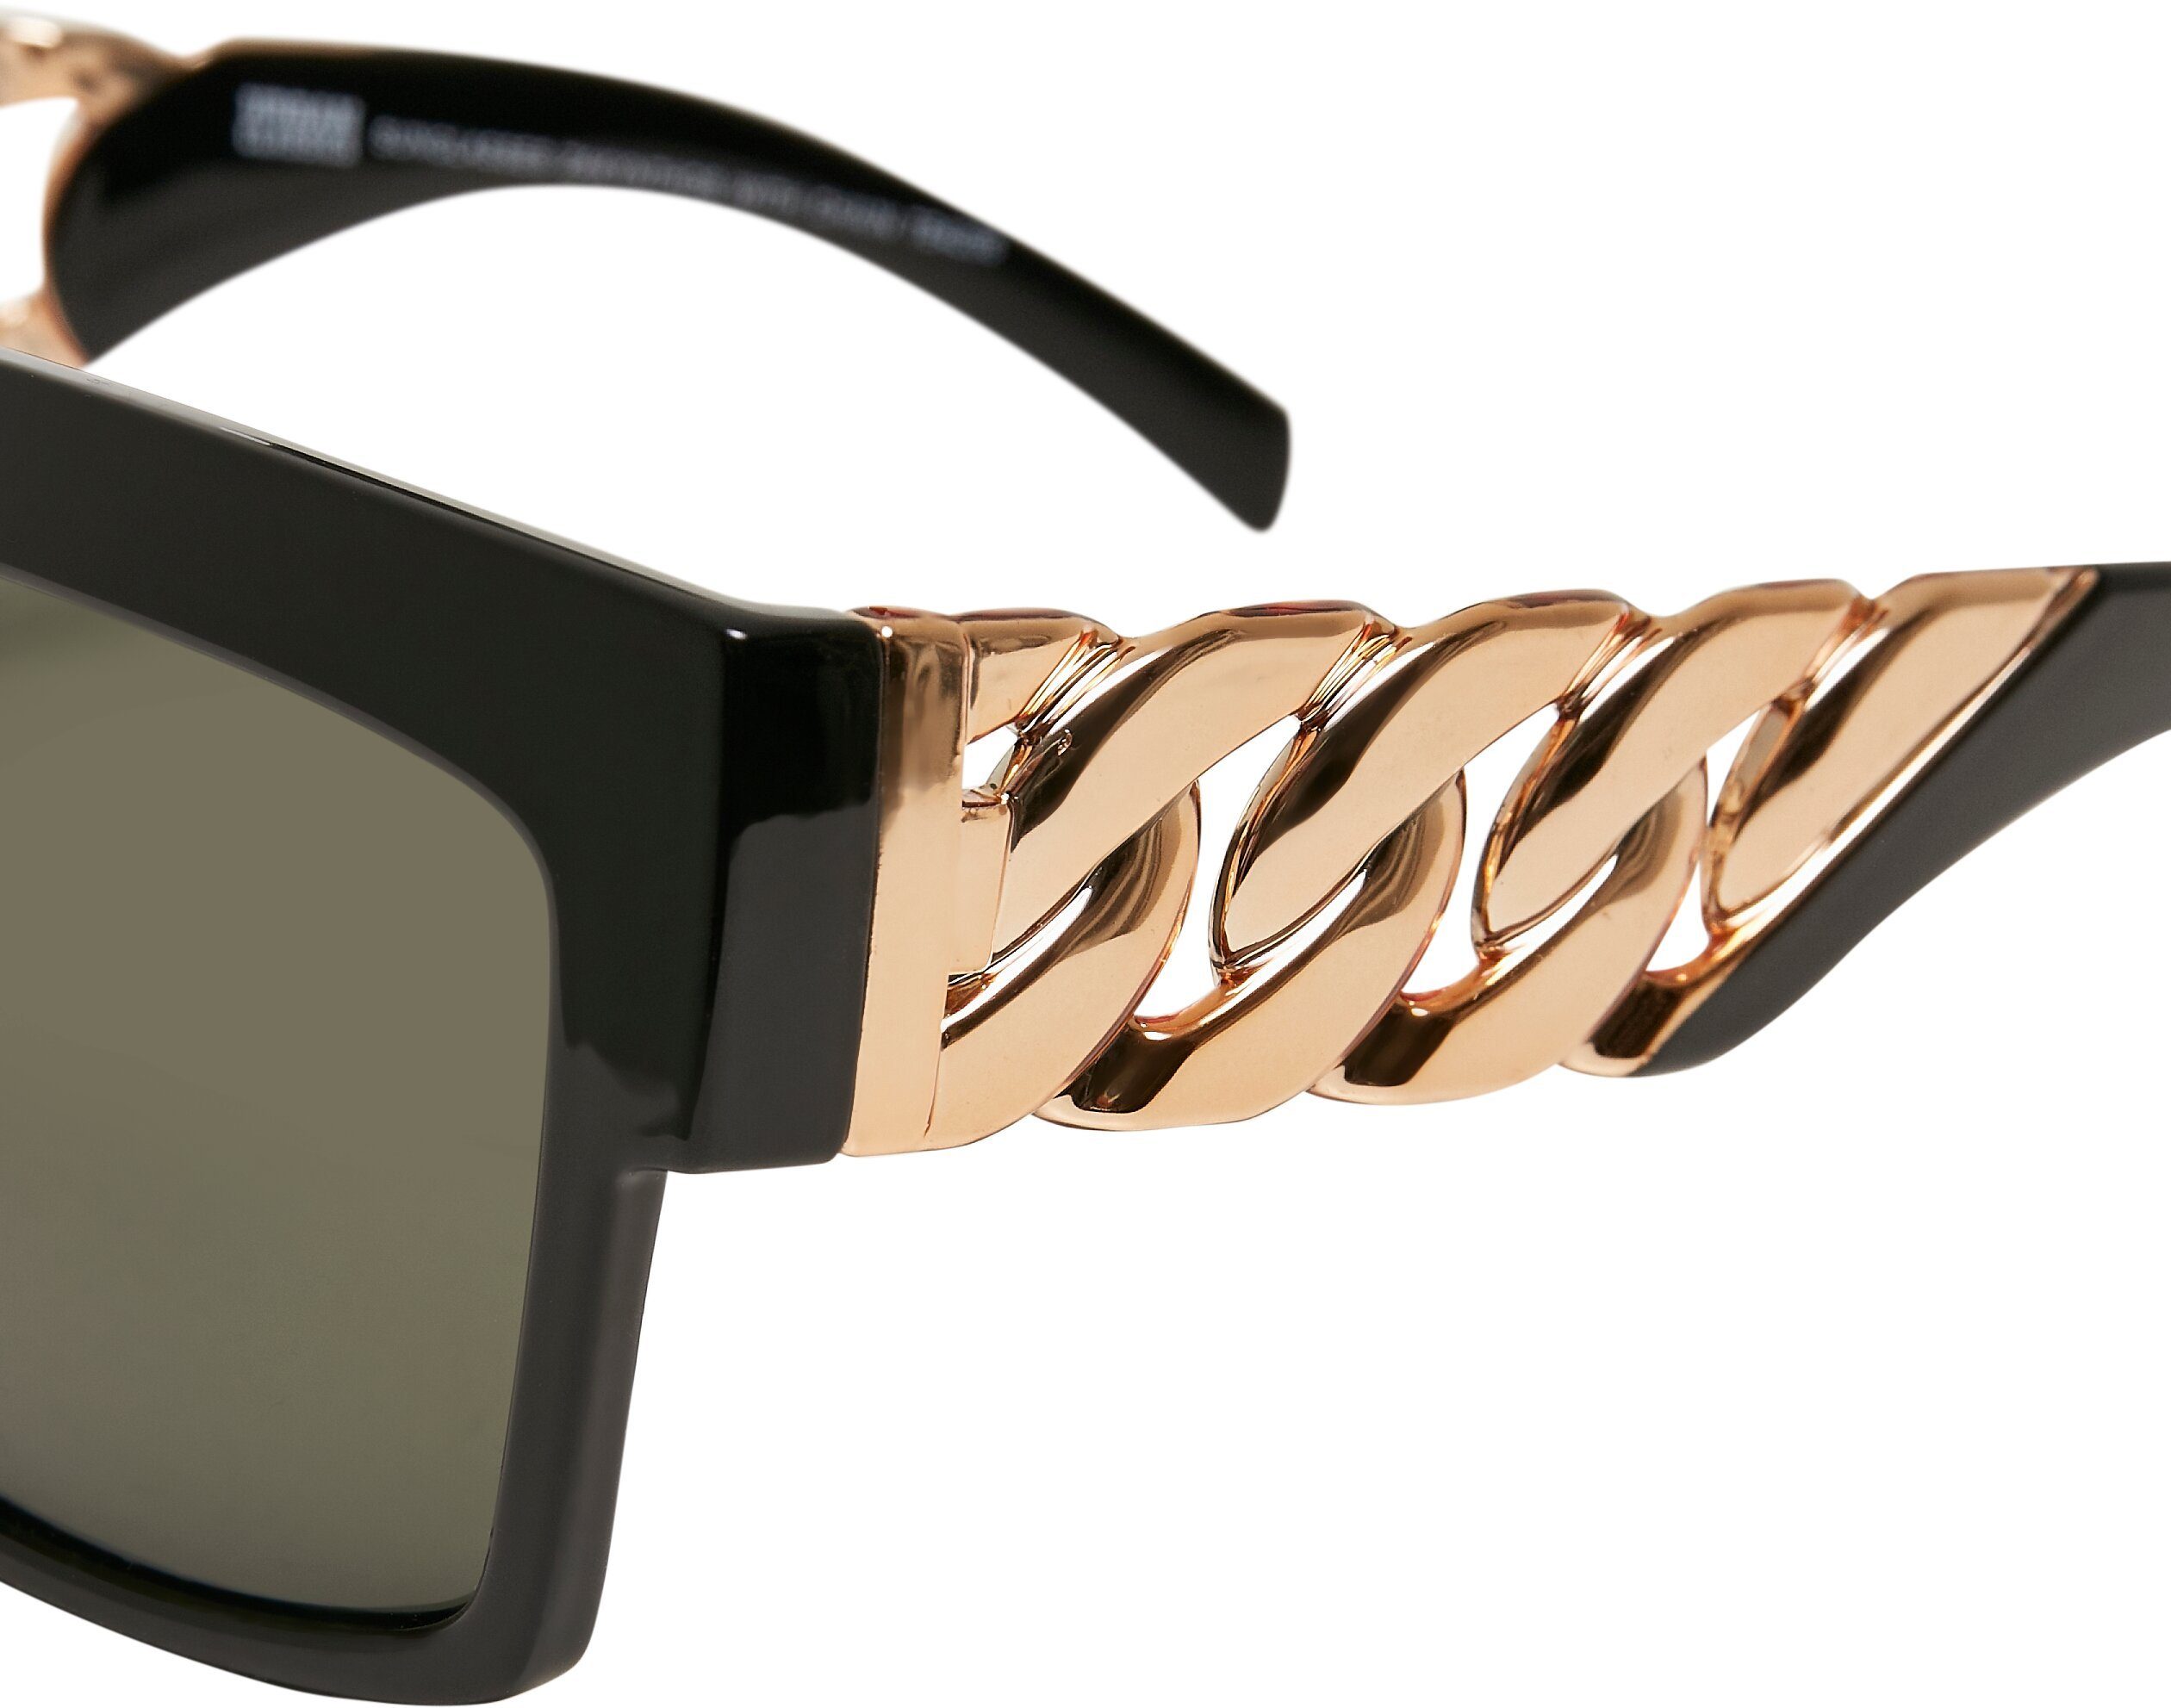 Accessoires Zakynthos black/gold with CLASSICS Chain Sonnenbrille URBAN Sunglasses